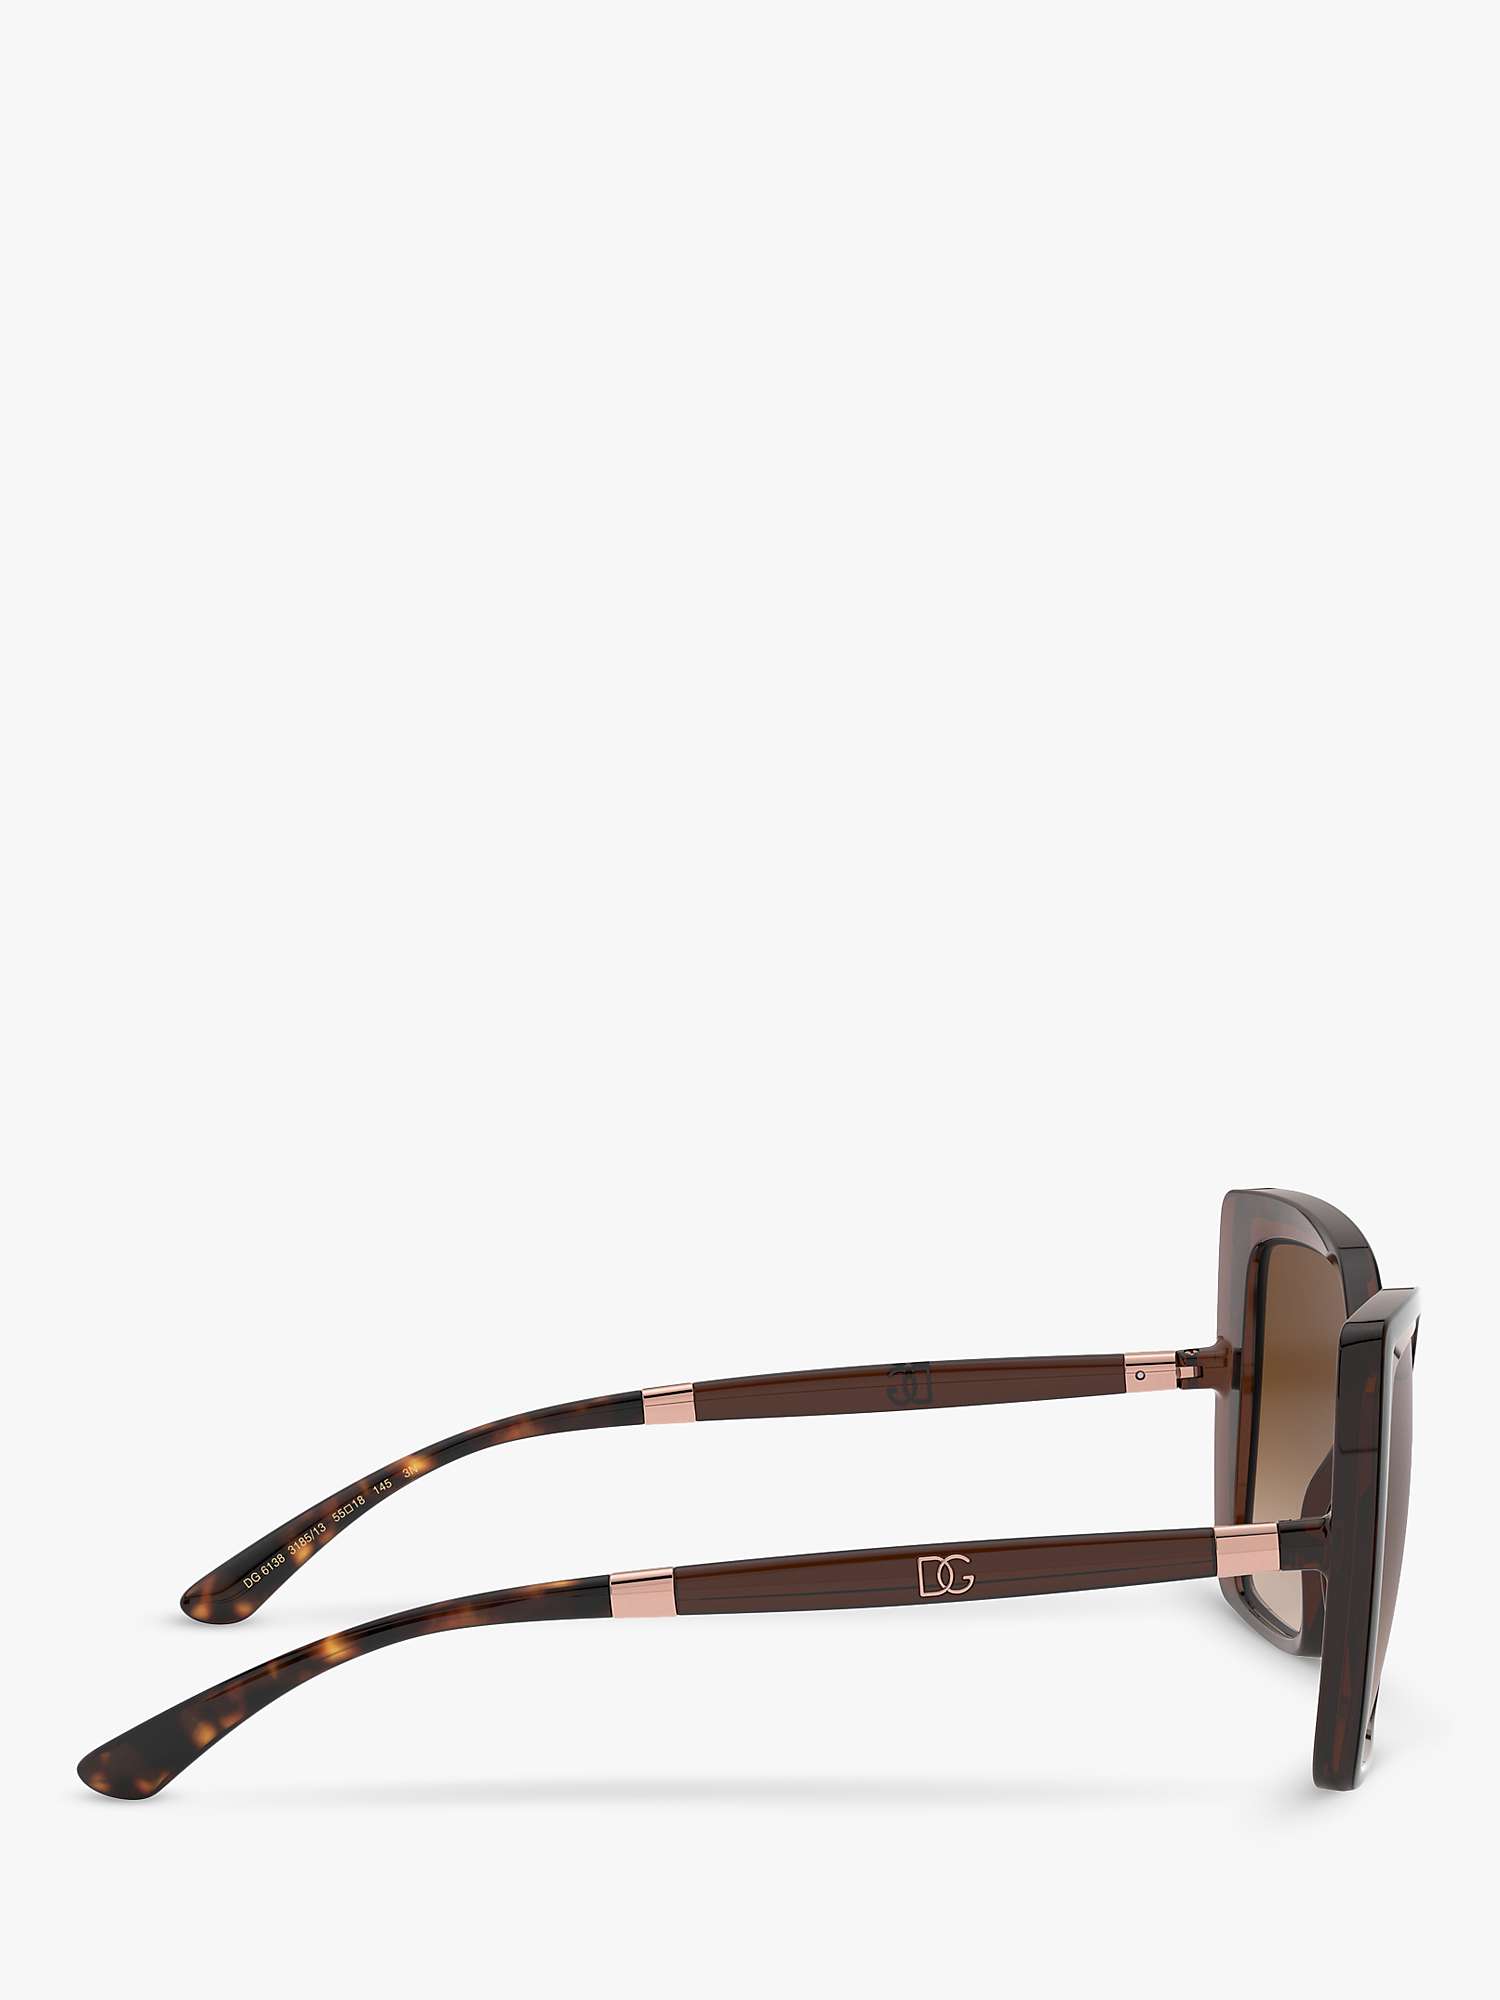 Buy Dolce & Gabbana DG6138 Women's Butterfly Sunglasses, Brown/Brown Gradient Online at johnlewis.com